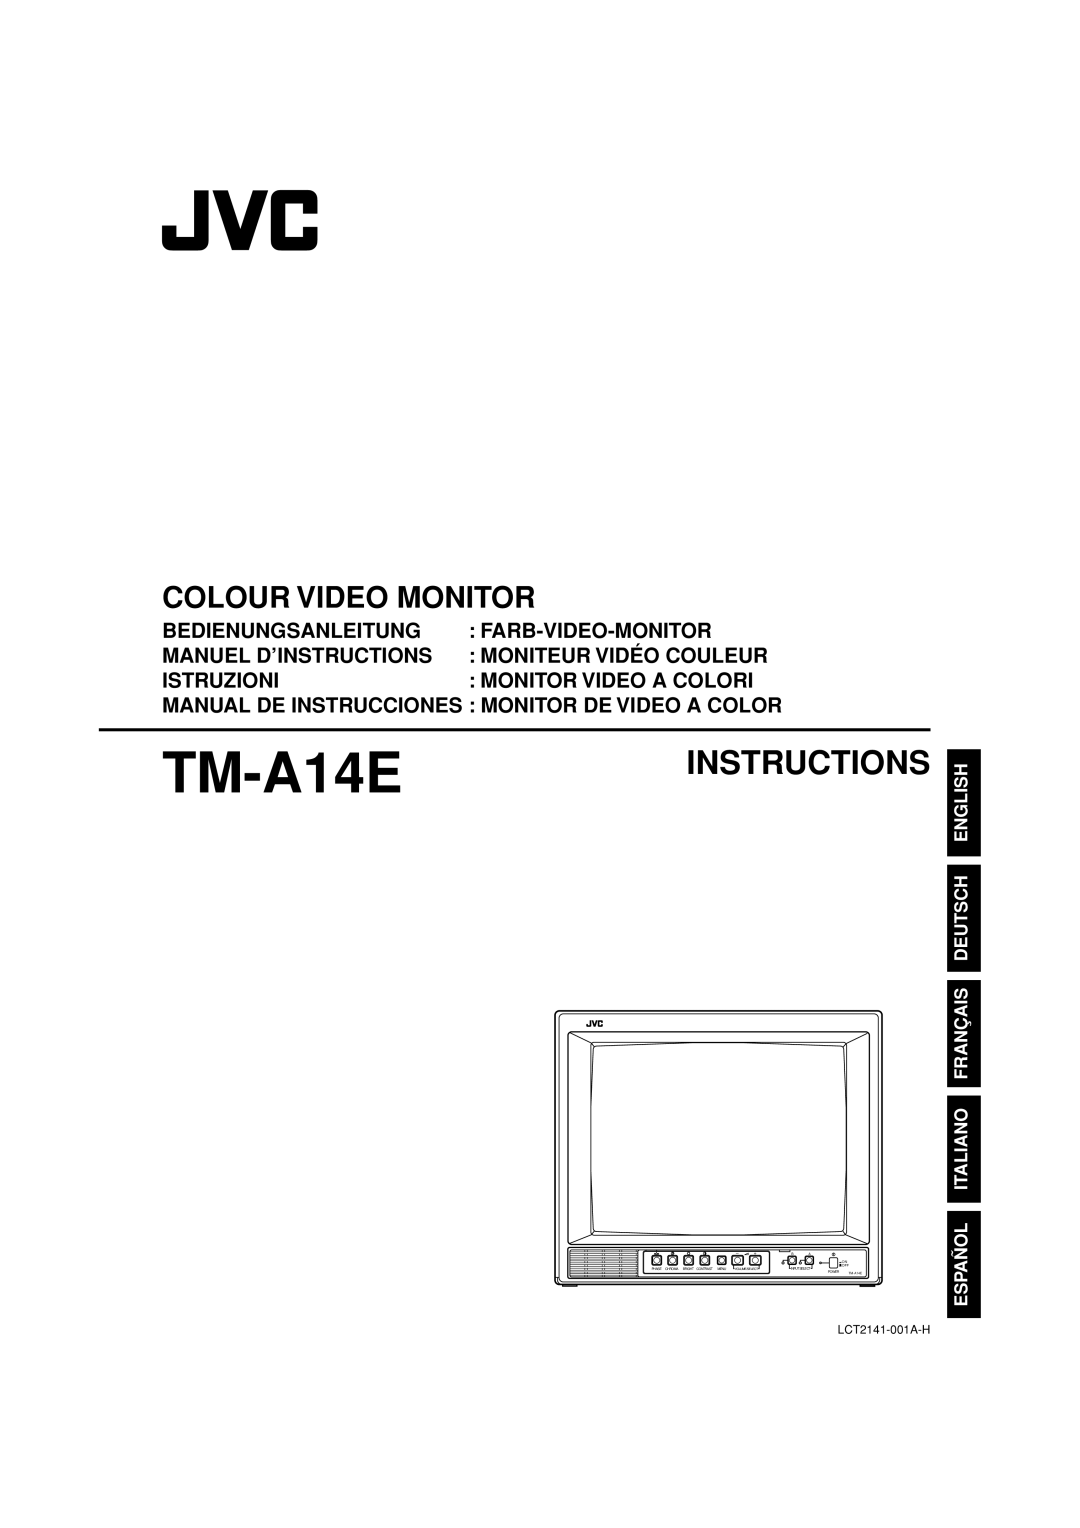 JVC LCT2141-001A-H manual Colour Video Monitor, Bedienungsanleitung, Farb-Video-Monitor, Manuel D’Instructions, Istruzioni 